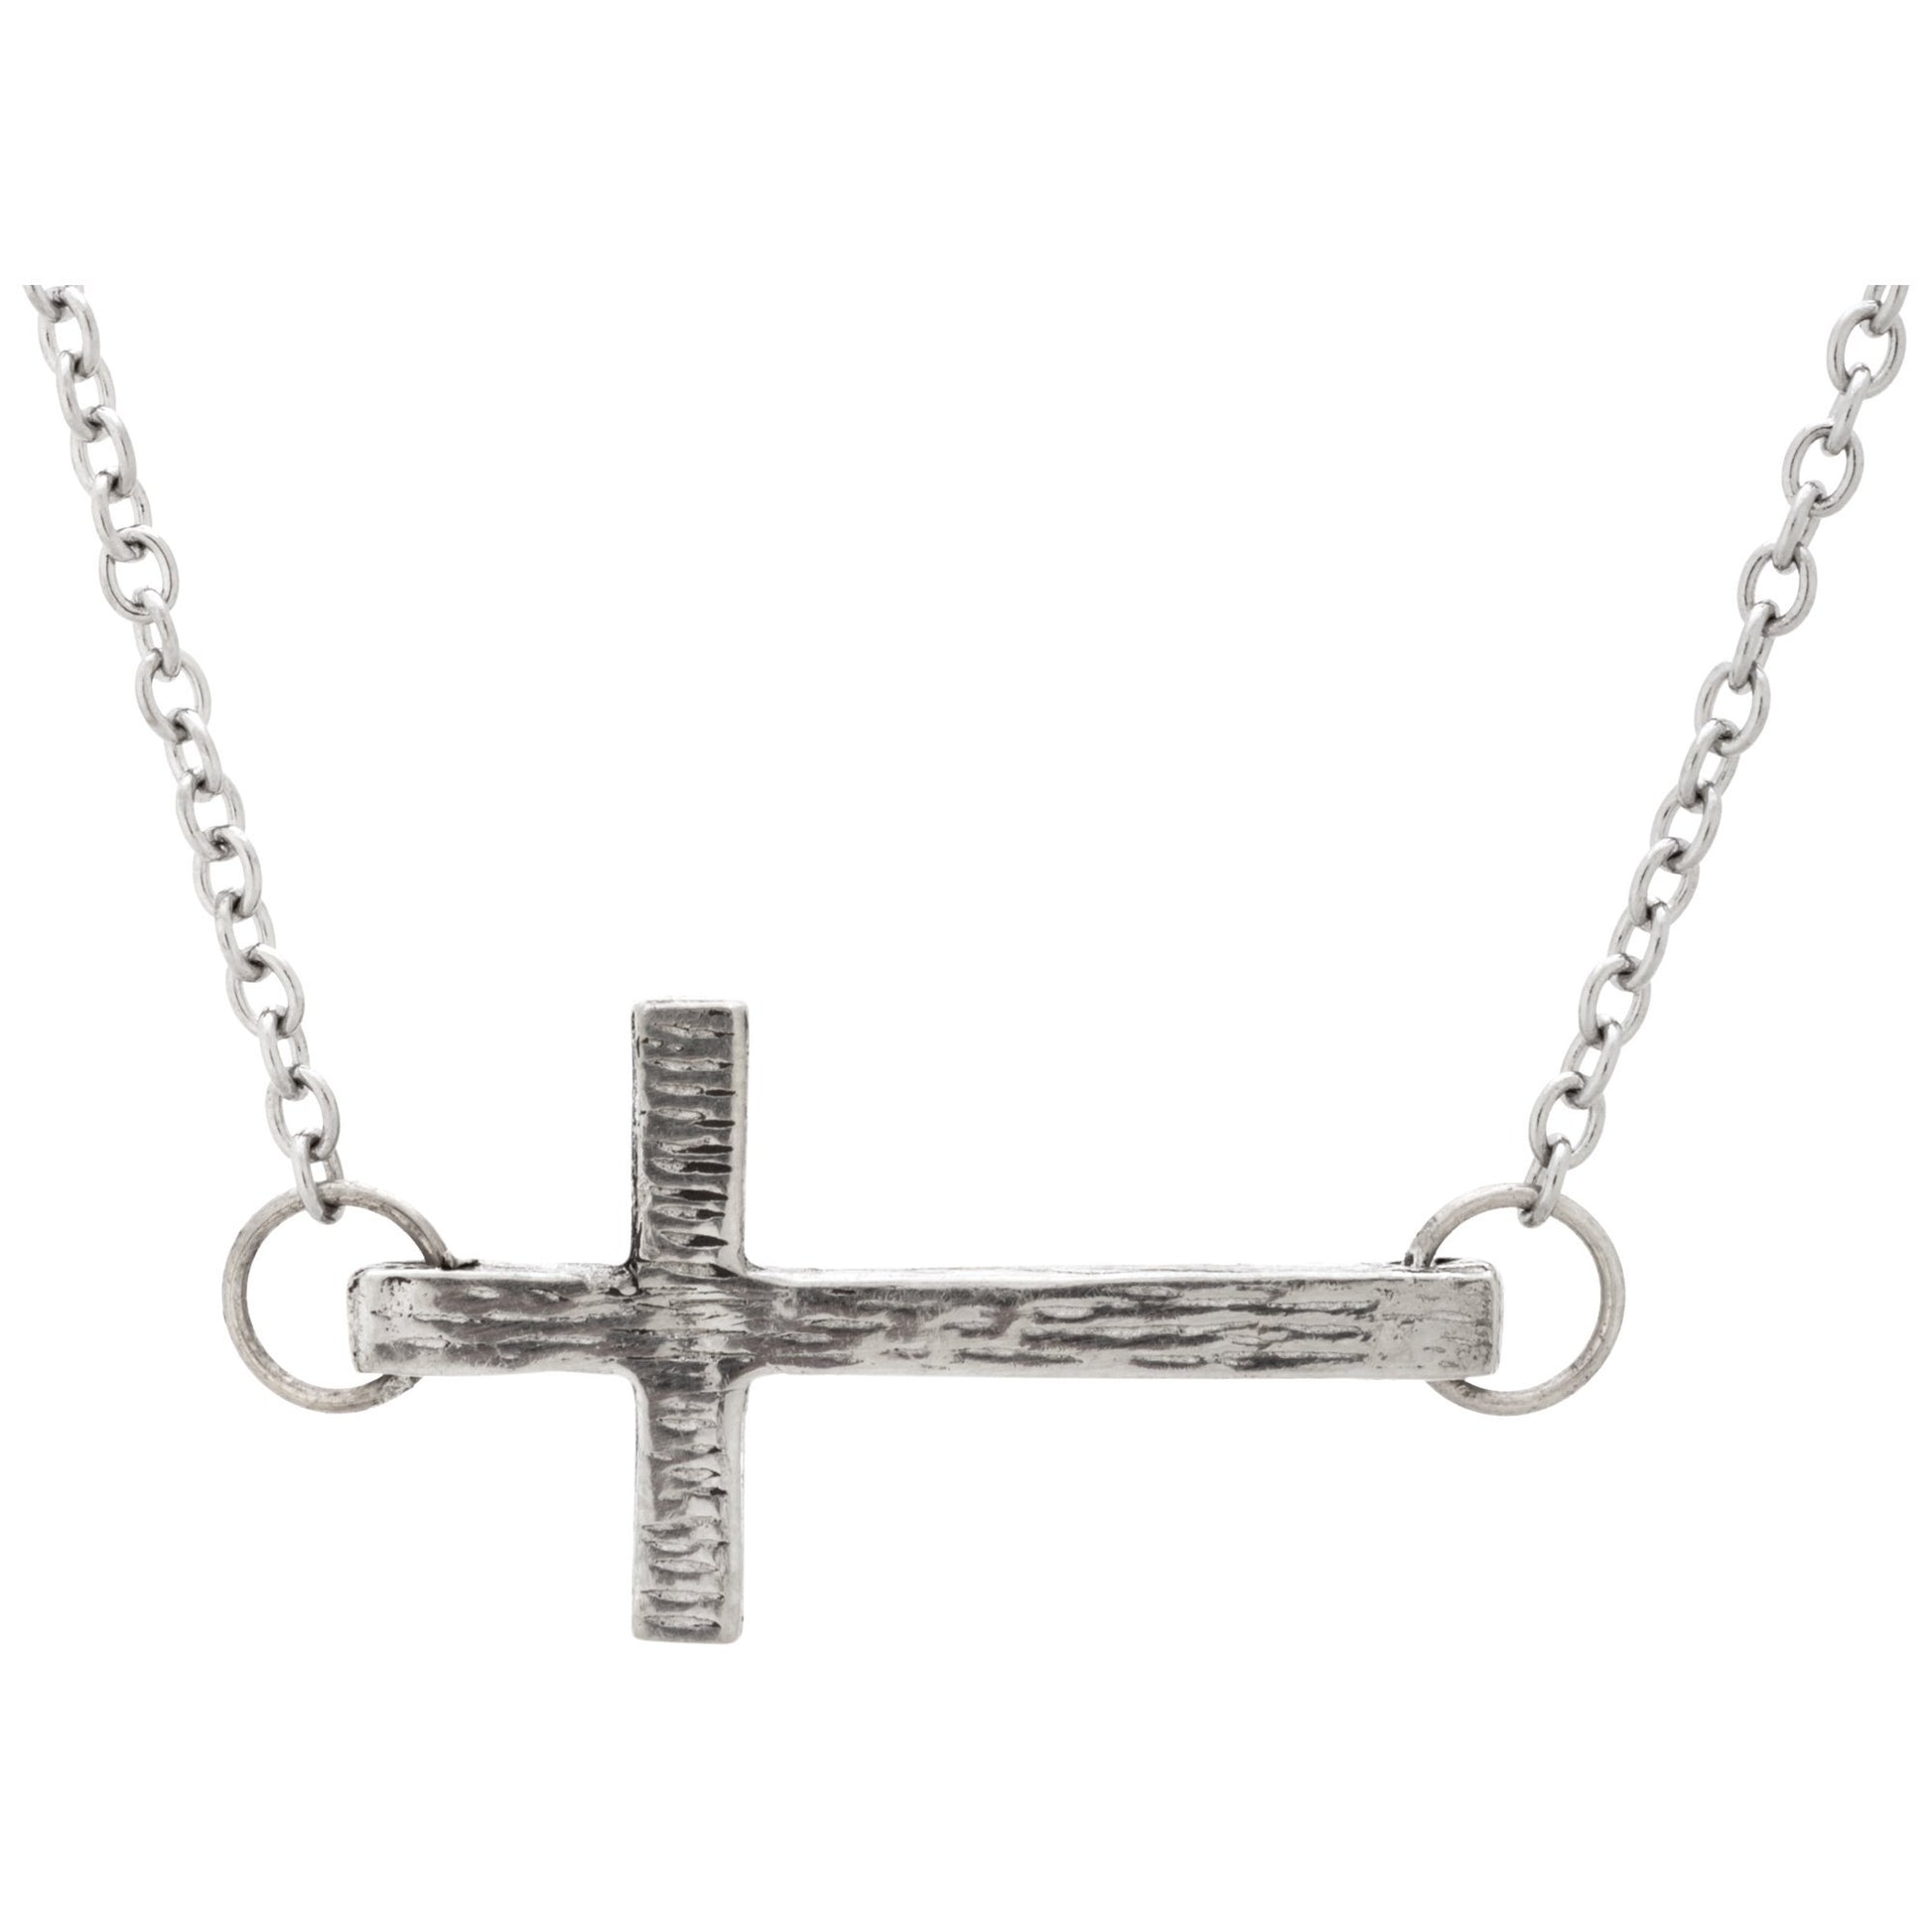 Have A Little Faith Necklace